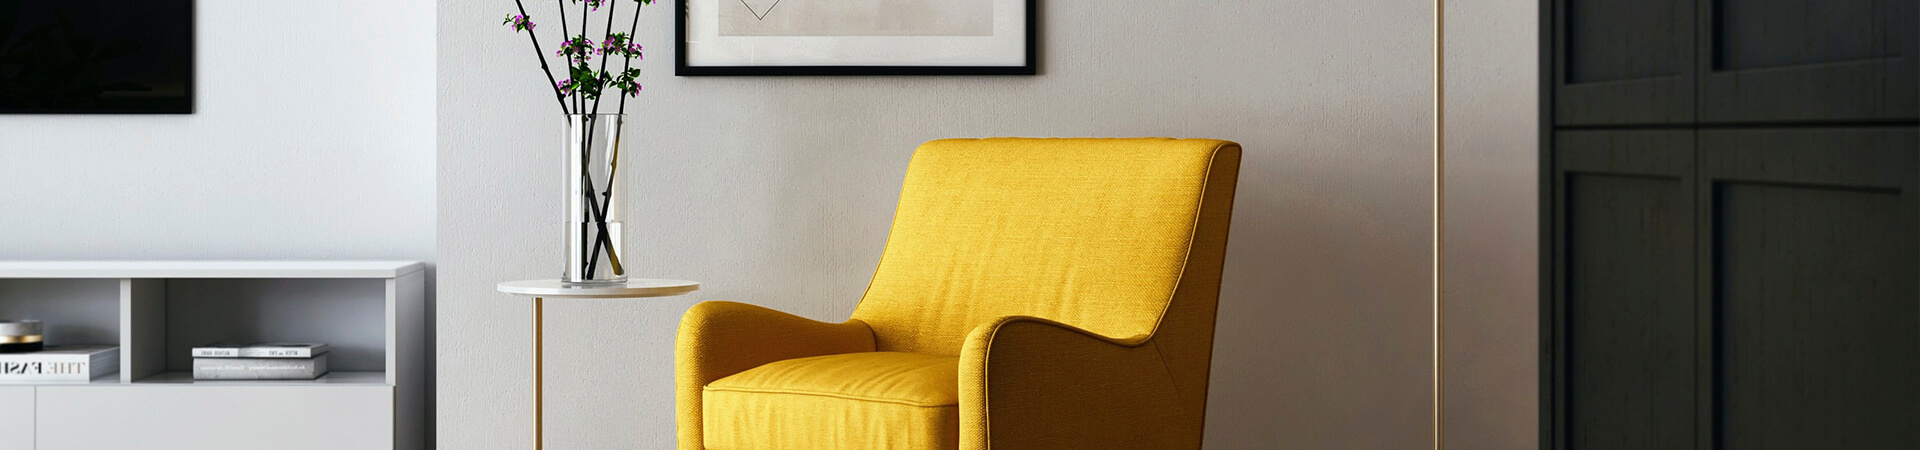 Sala con silla amarilla